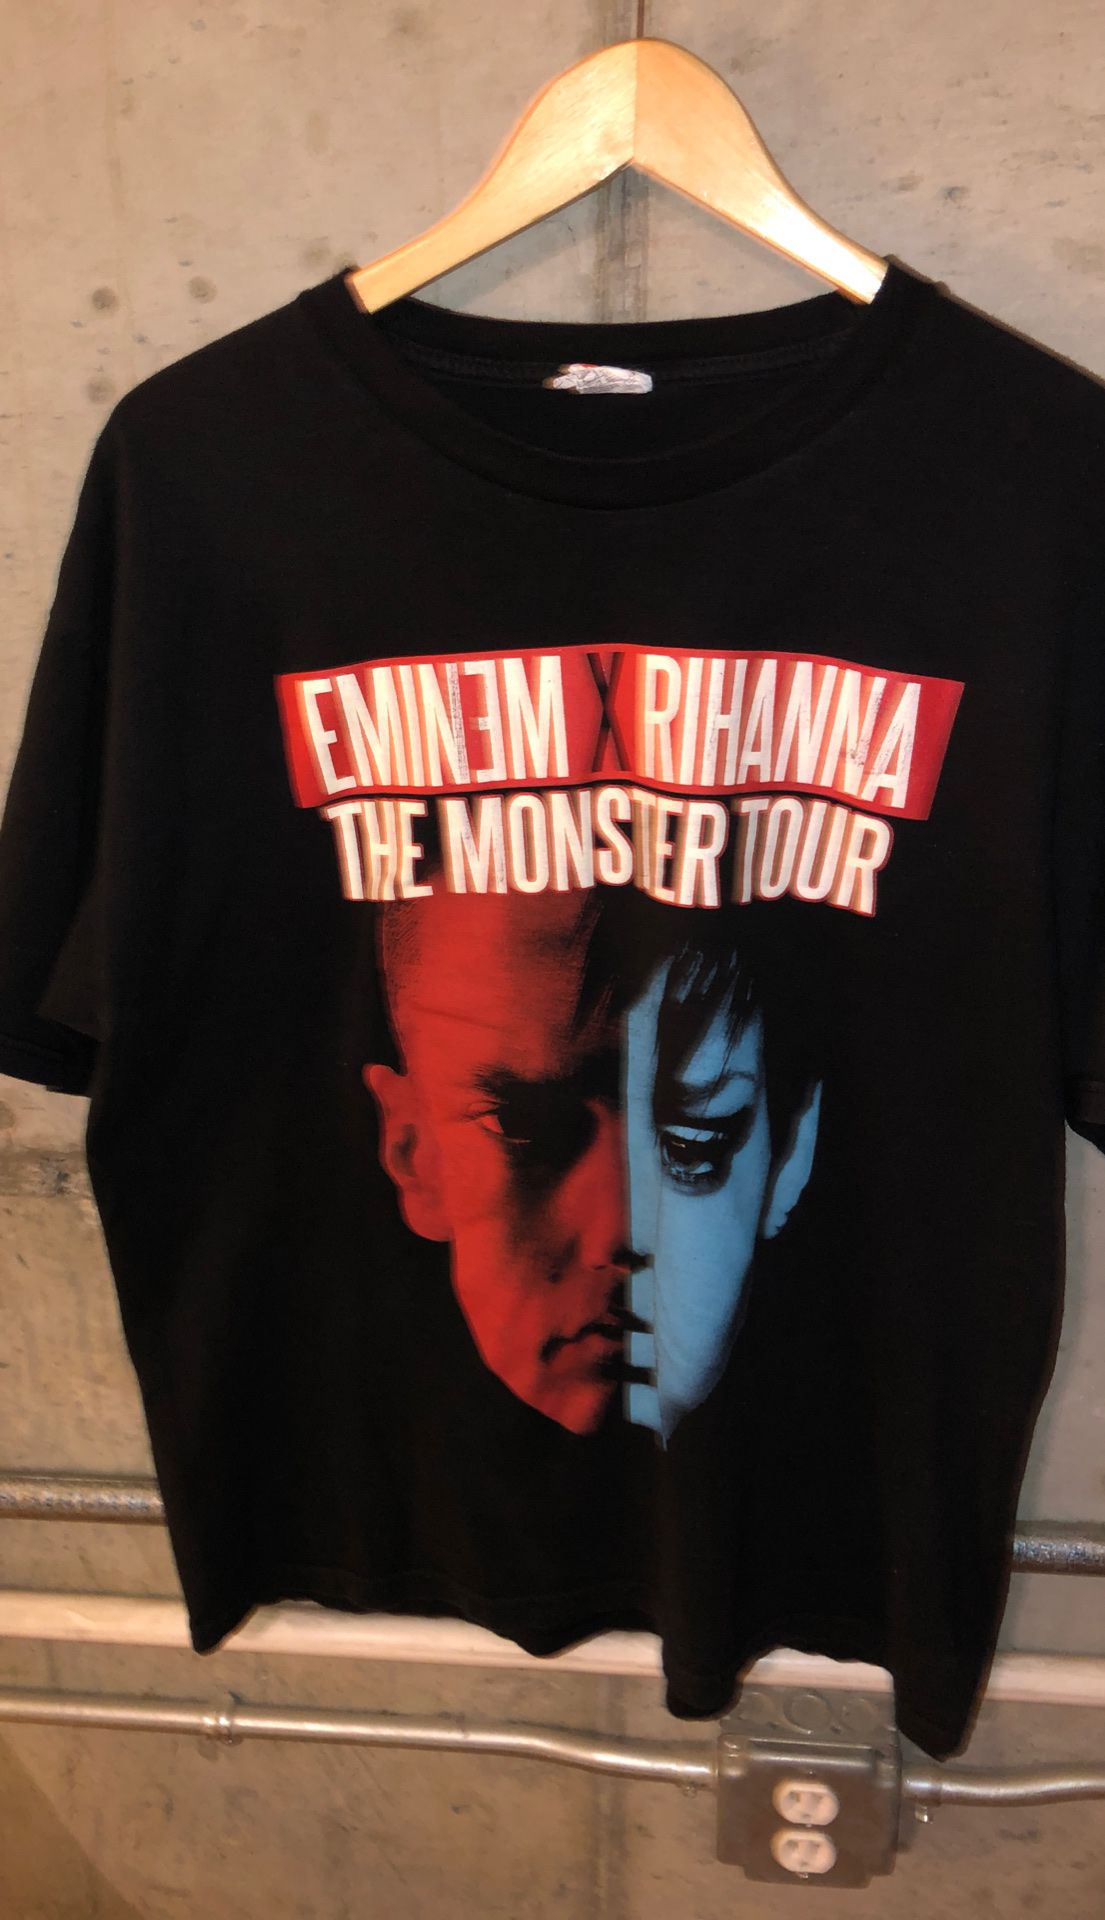 Eminem x Rihanna the monster tour band tee Xl